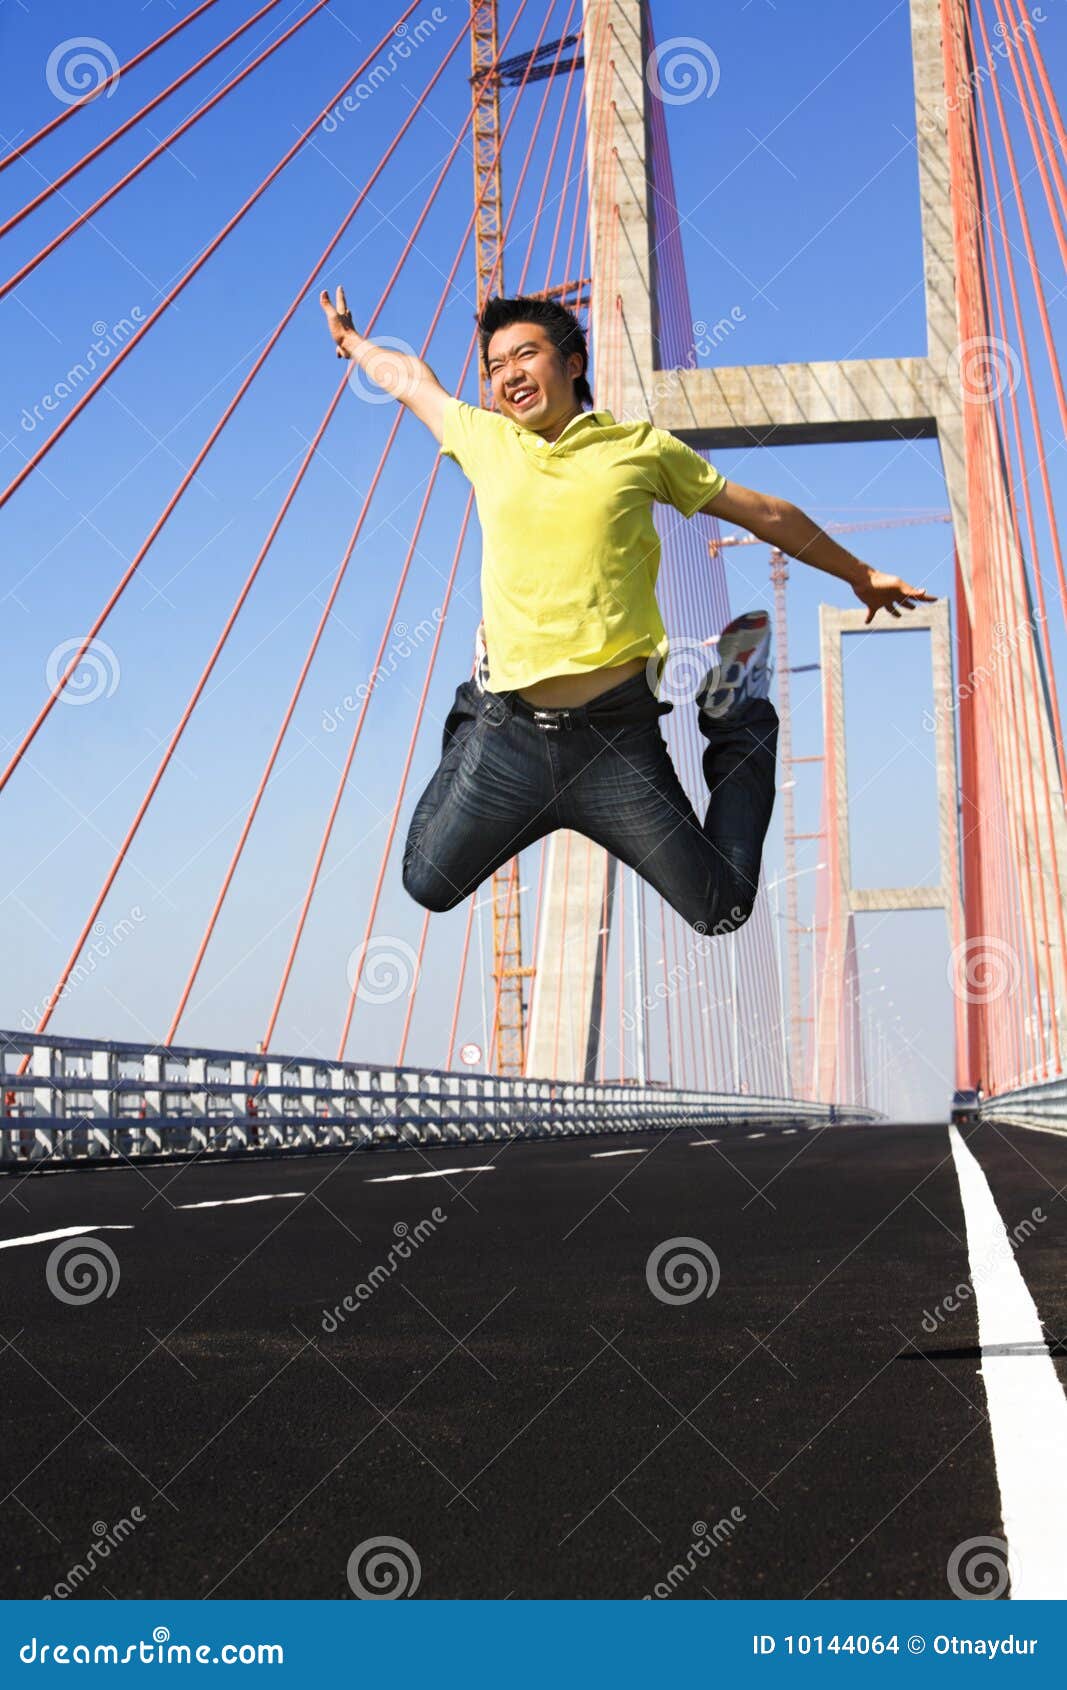 man jumps off blue water bridge 2021